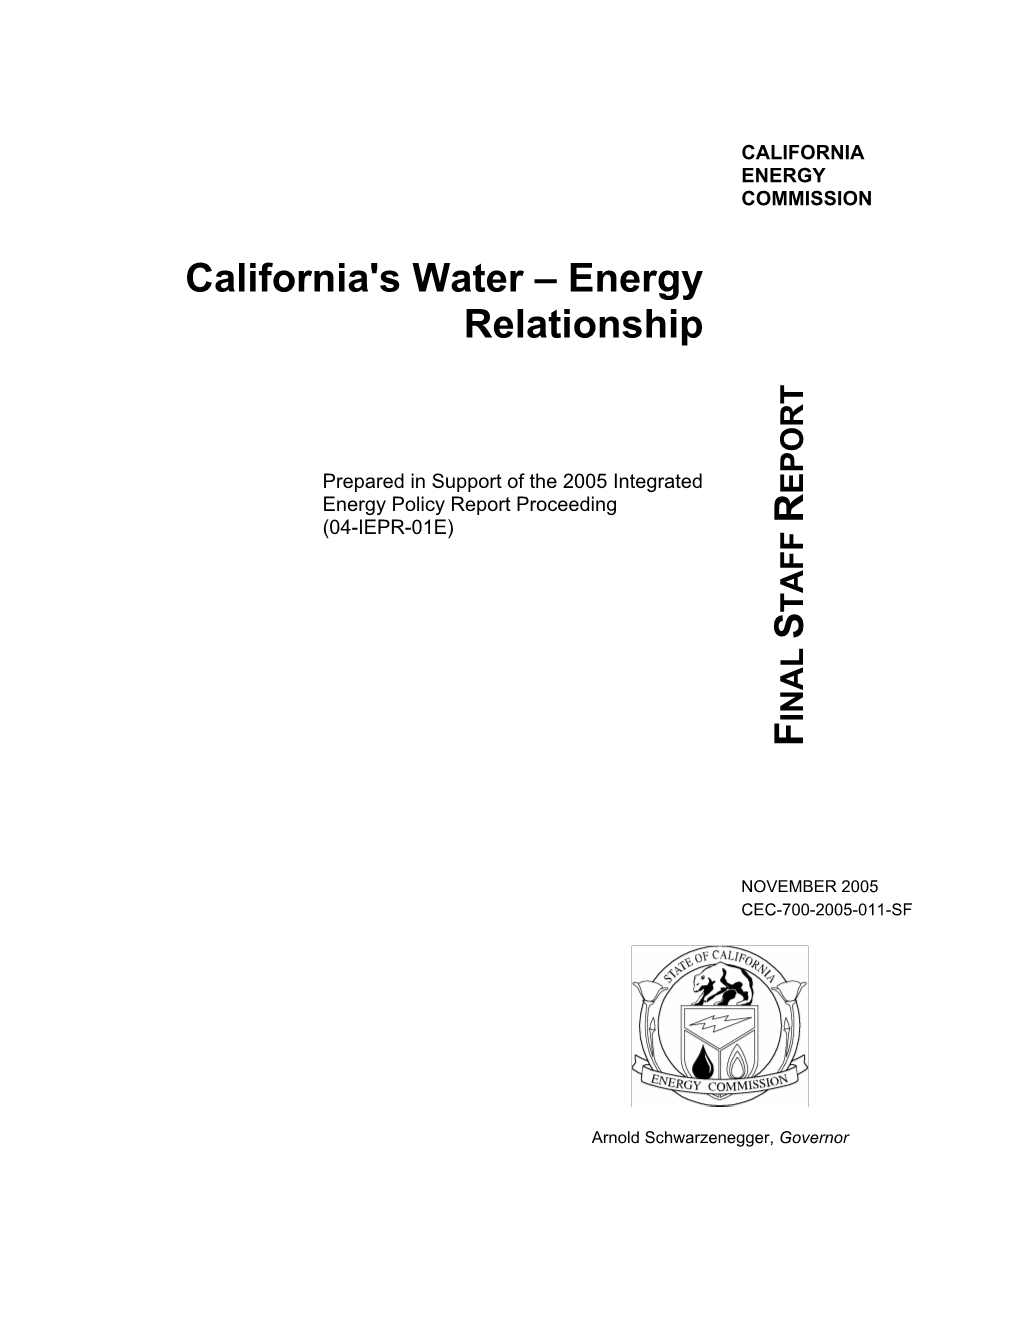 California's Water-Energy Relationship